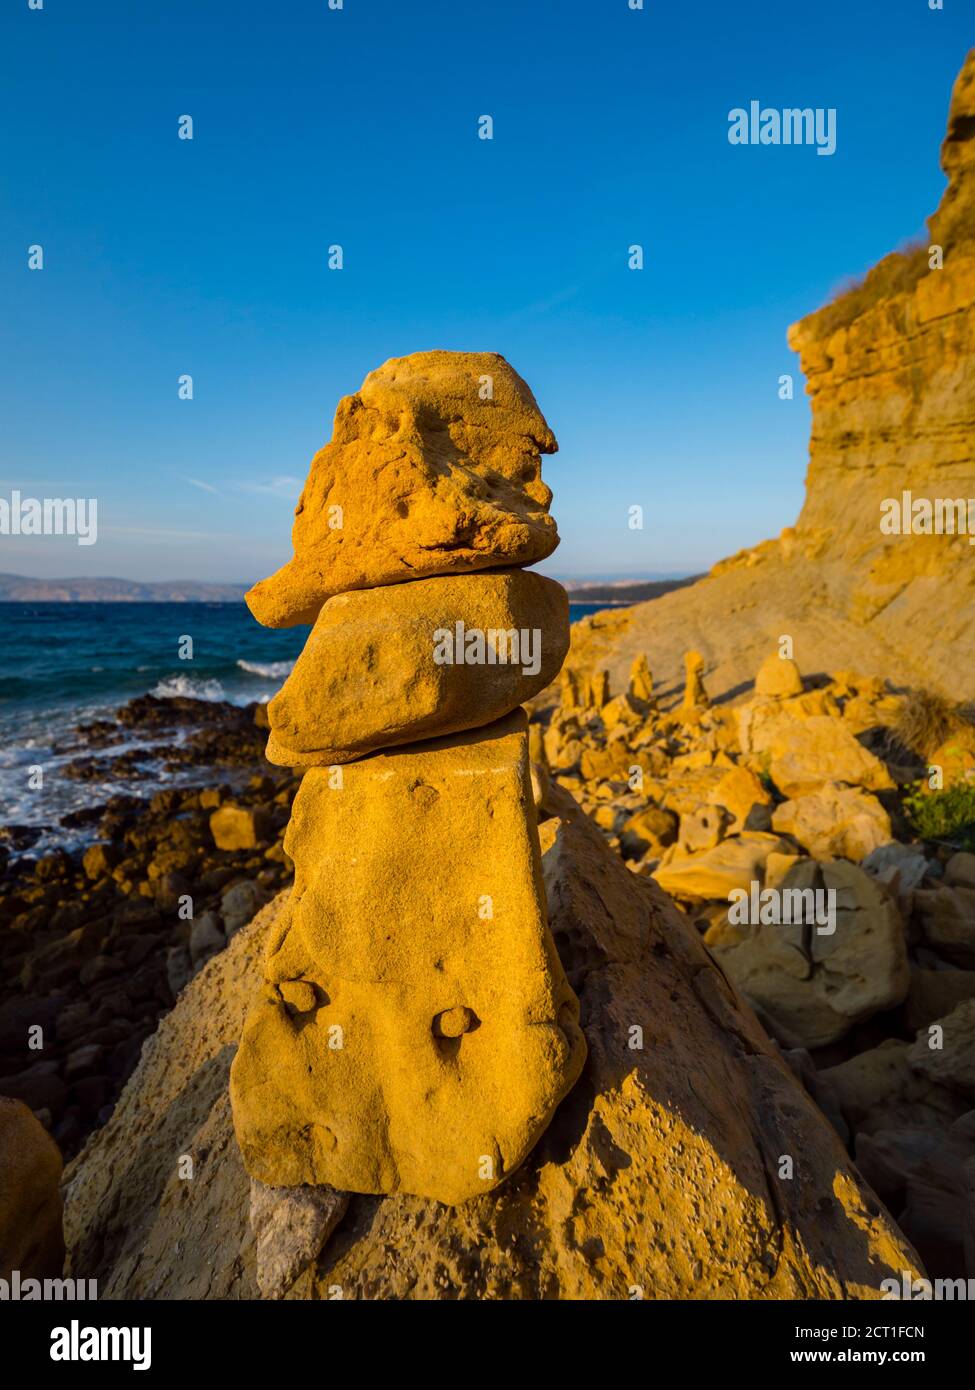 Piled stacked rocks on beach balance balancing tertiary marls and sandstones of the Lopar peninsula on Rab island Croatia Europe Stock Photo